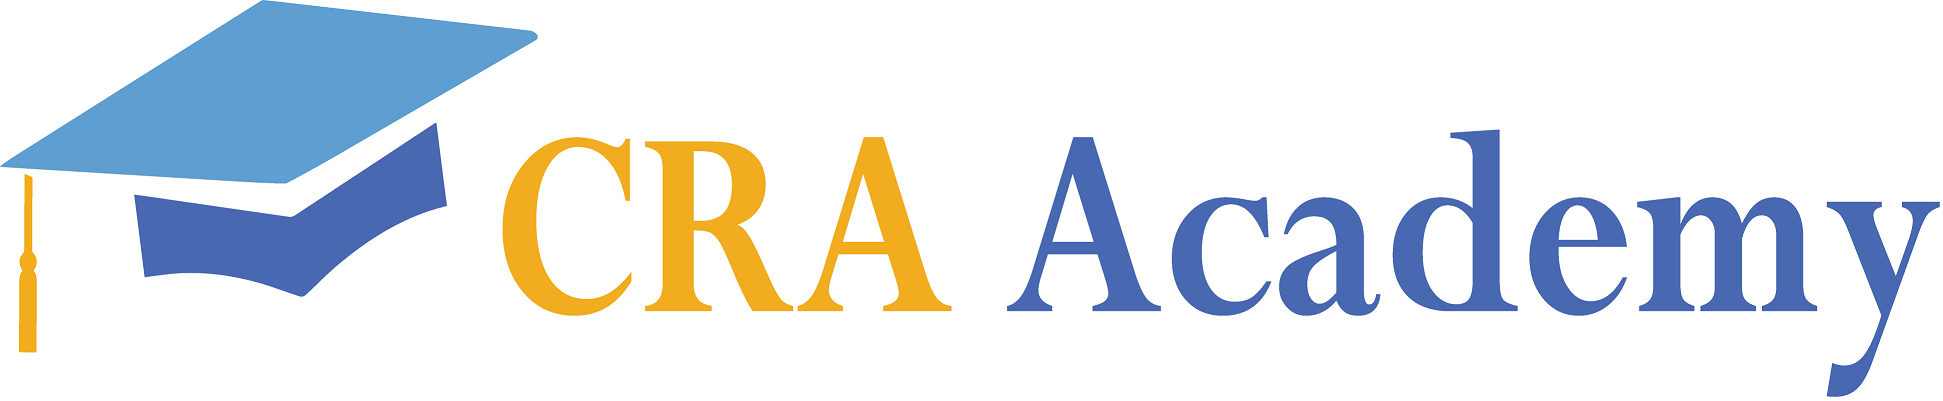 CRA Academy (2GL Outsourcing) logo